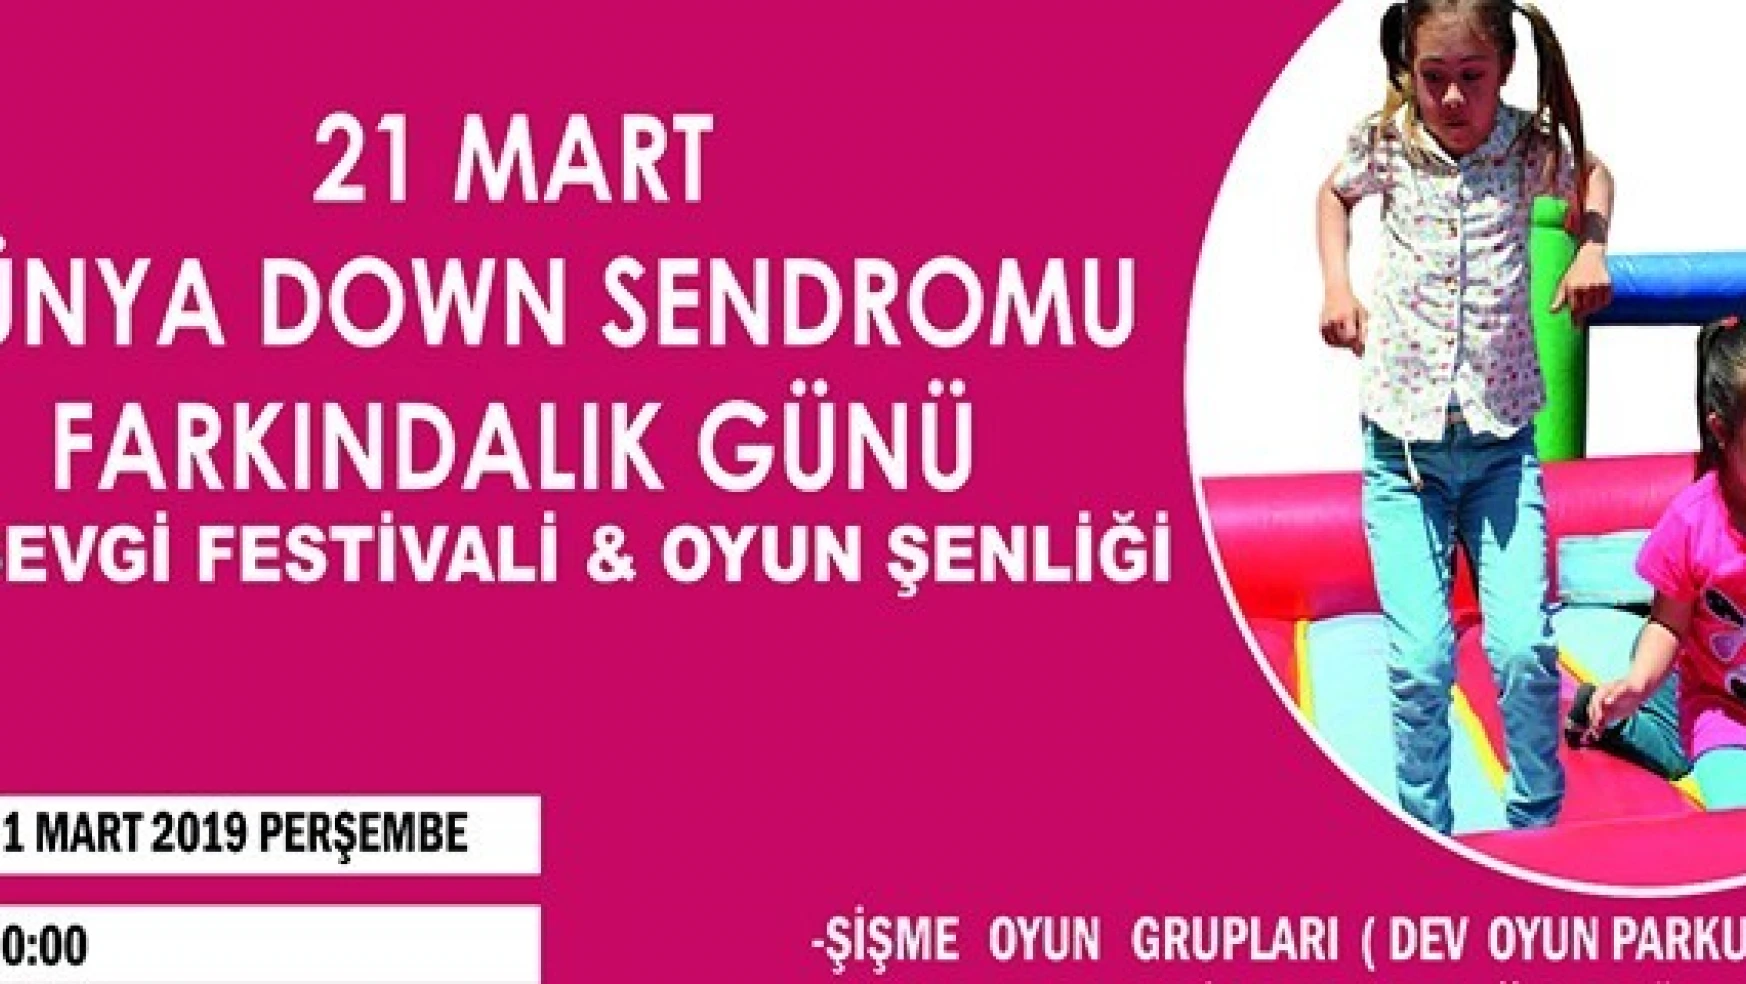 +1 Sevgi festivali, Kahramanmaraş'ta başlıyor!